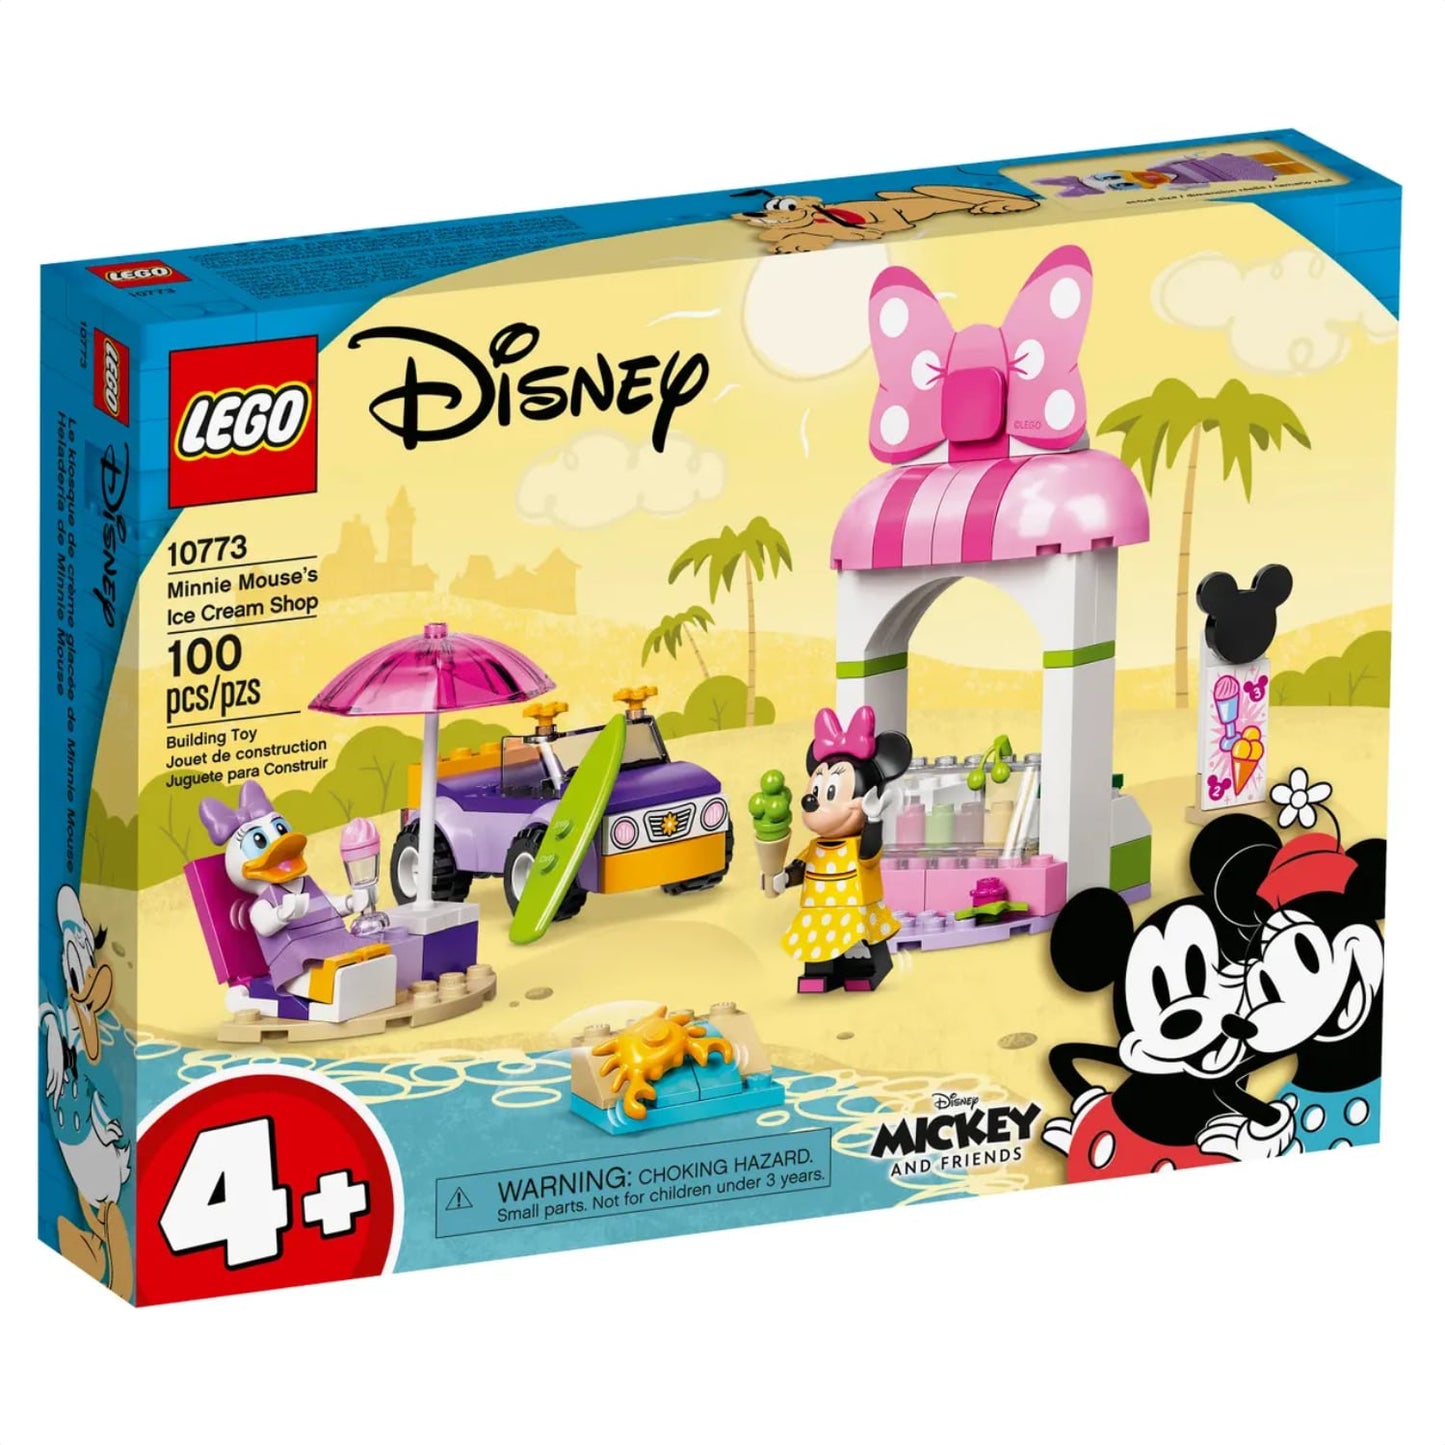 Lego 10773 Disney Minnie Mouse's Ice Cream Shop